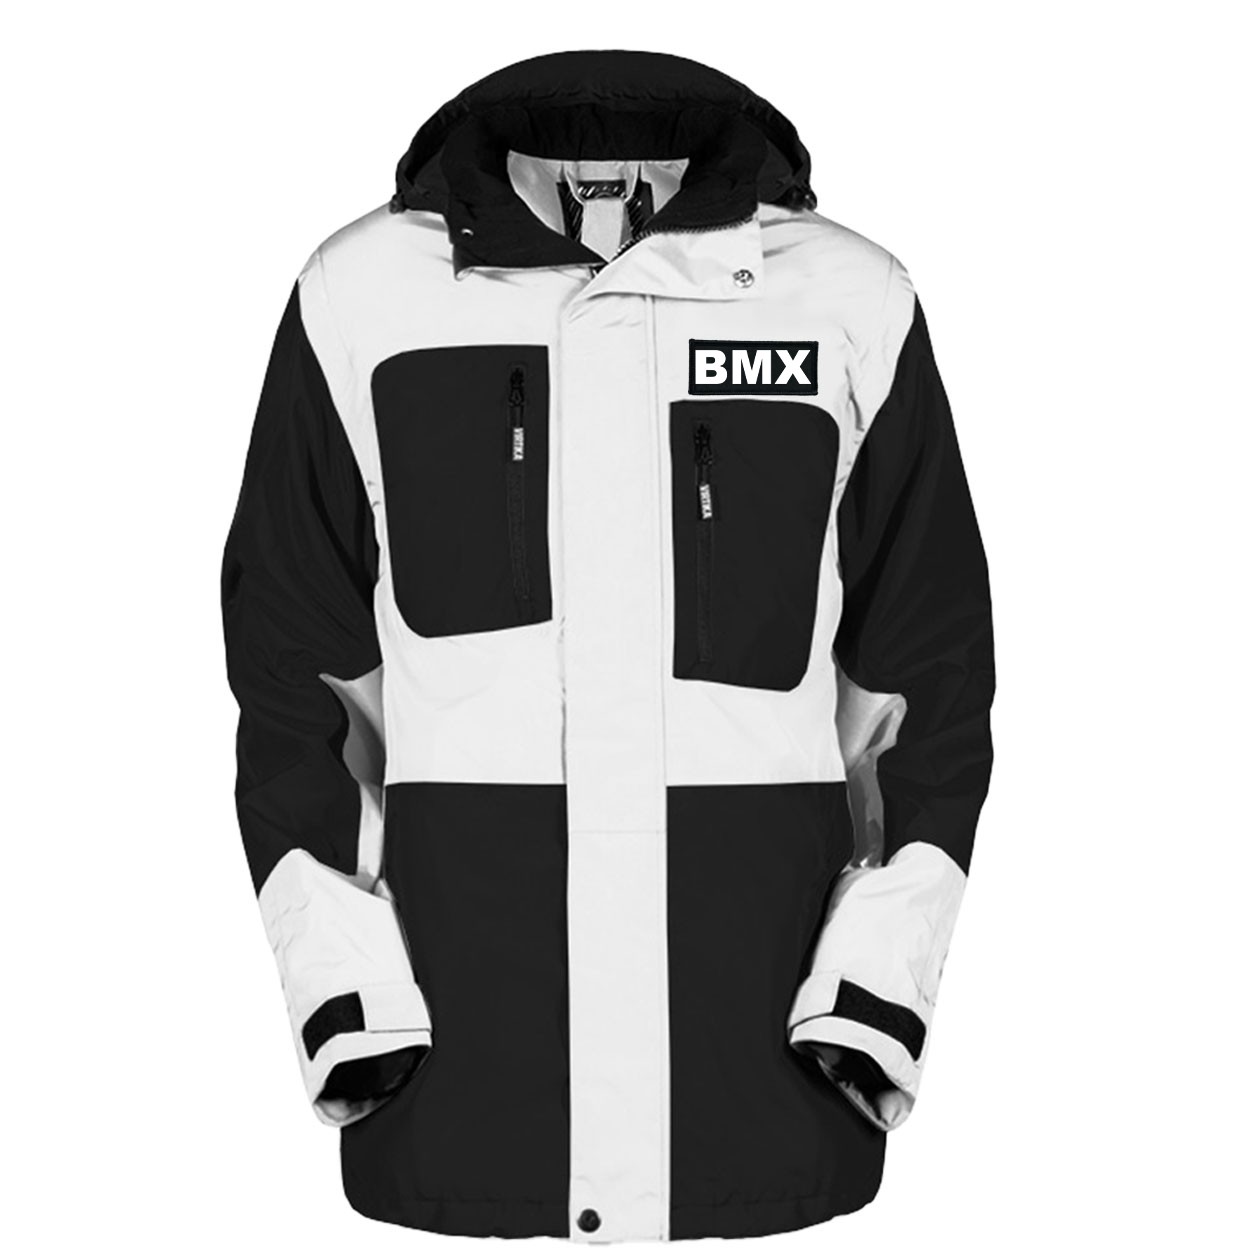 BMX Brand Logo Classic Woven Patch Pro Snowboard Jacket (Black/White)